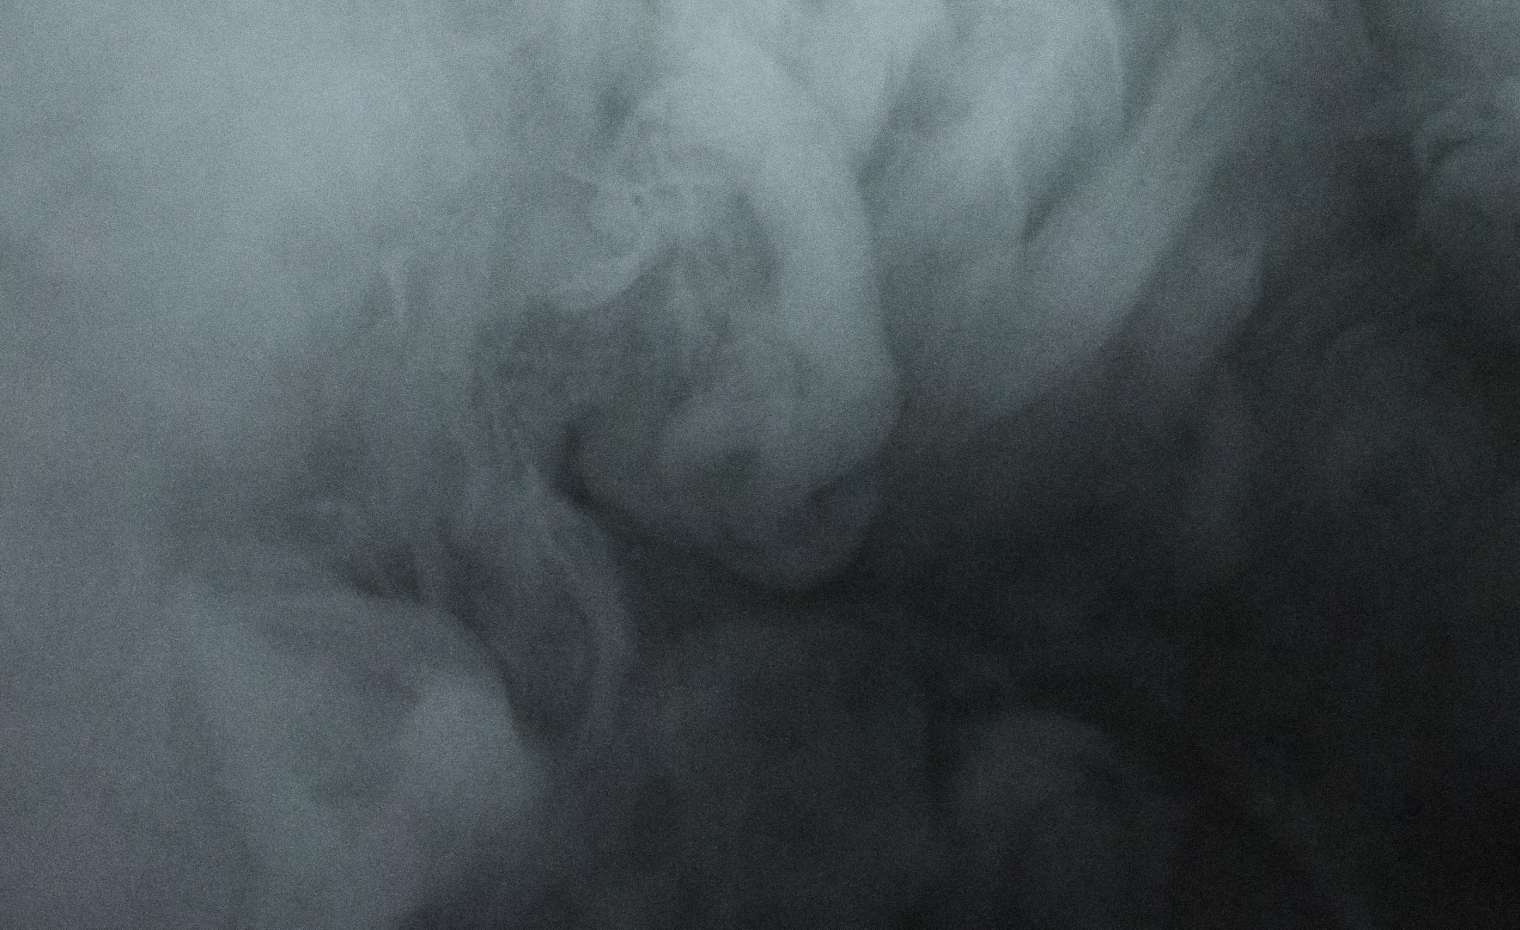 Black and White photo of bonfire smoke